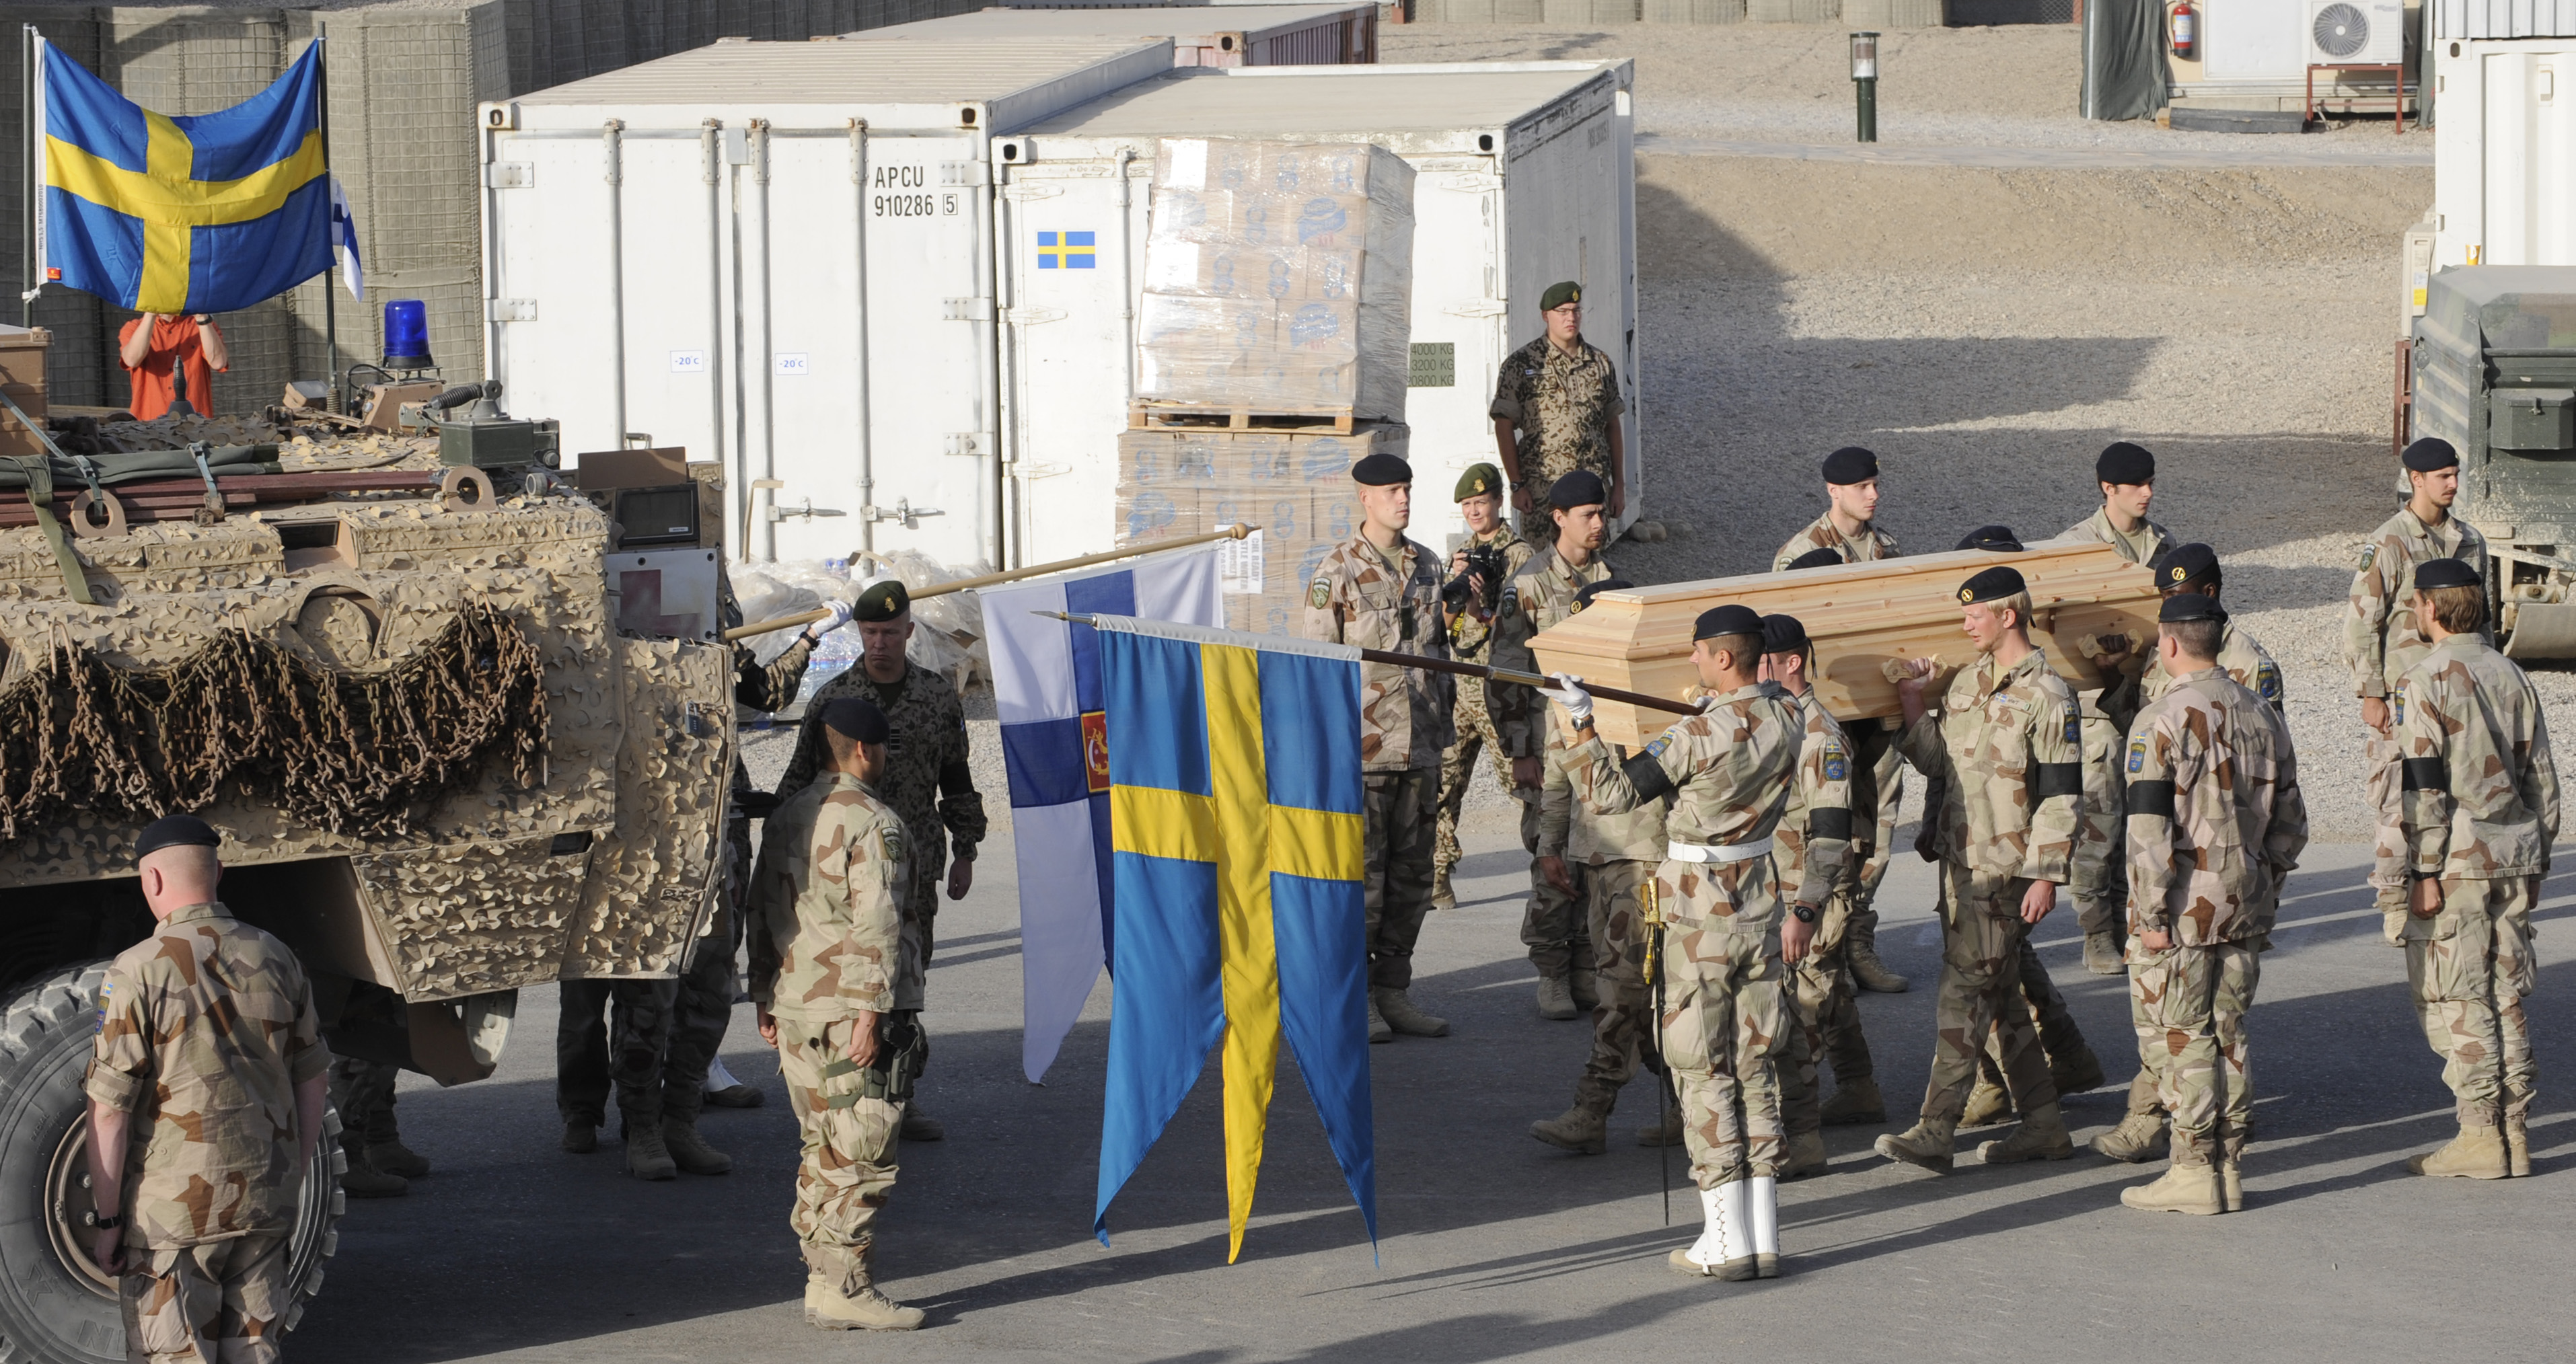 svenskar, Talibaner, Officer, Krig, Svensk, Skada, Soldat, Afghanistan